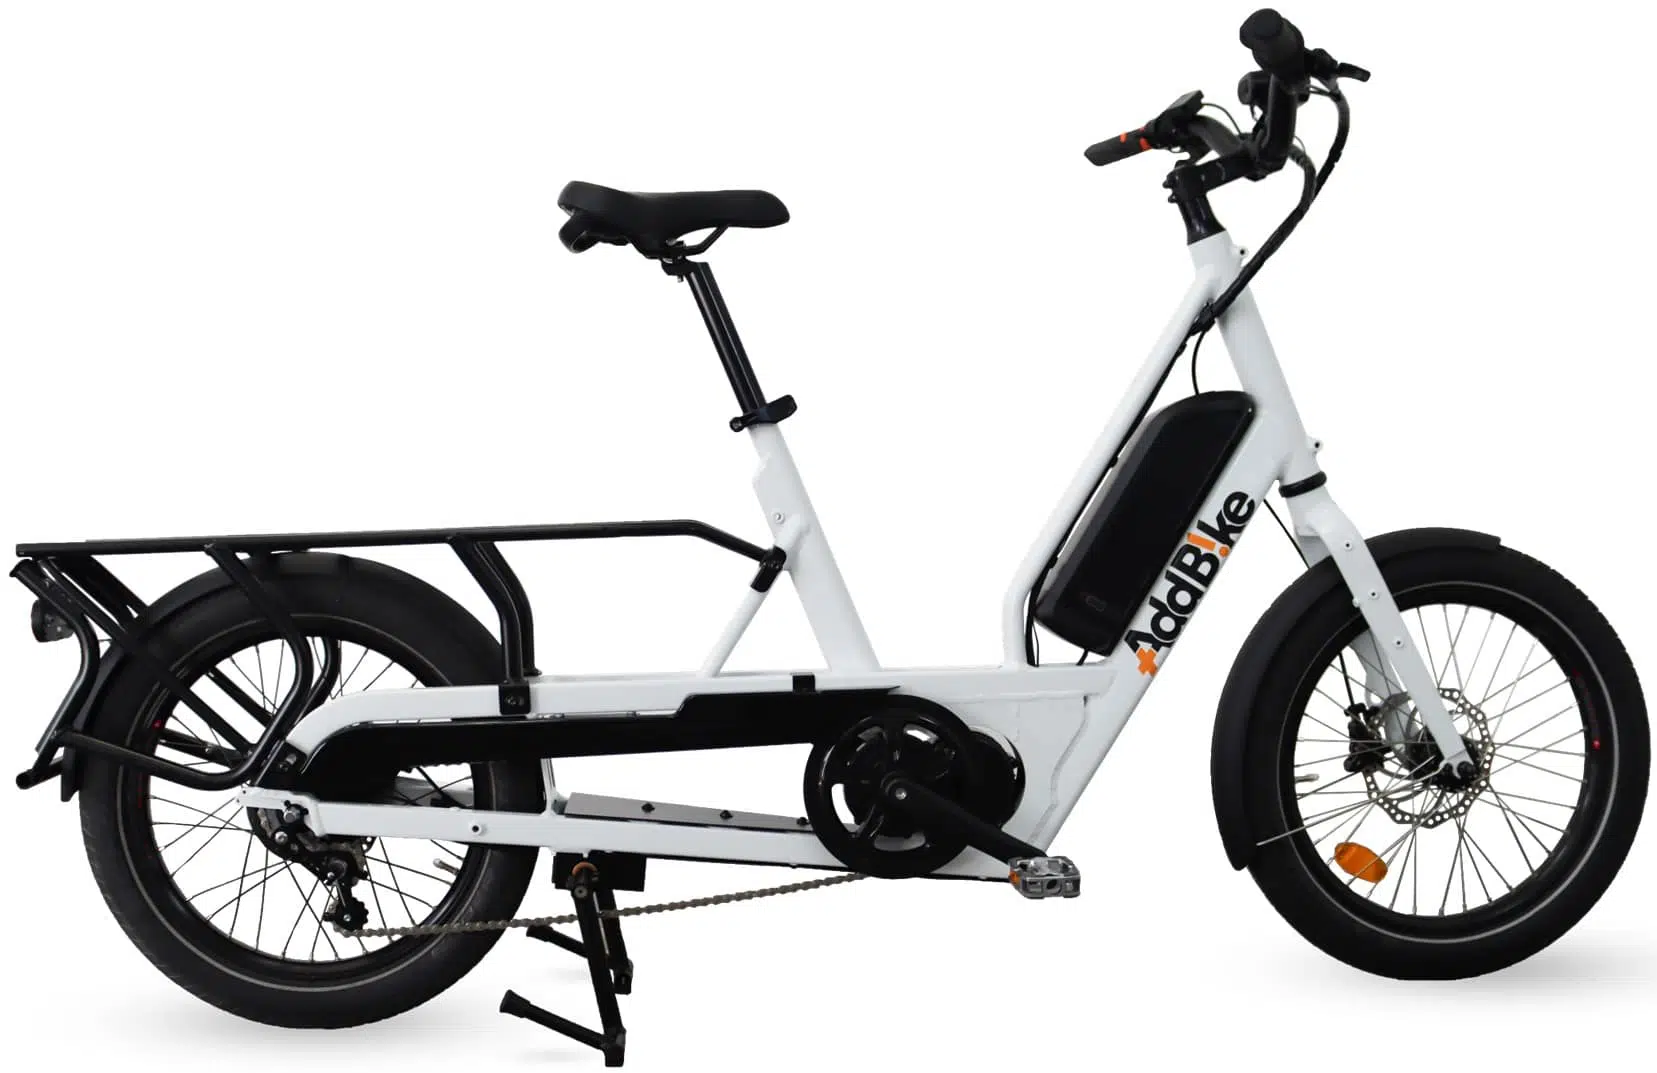 If you don't want a 3 wheel motorized bike, use the U-Cargo Lite